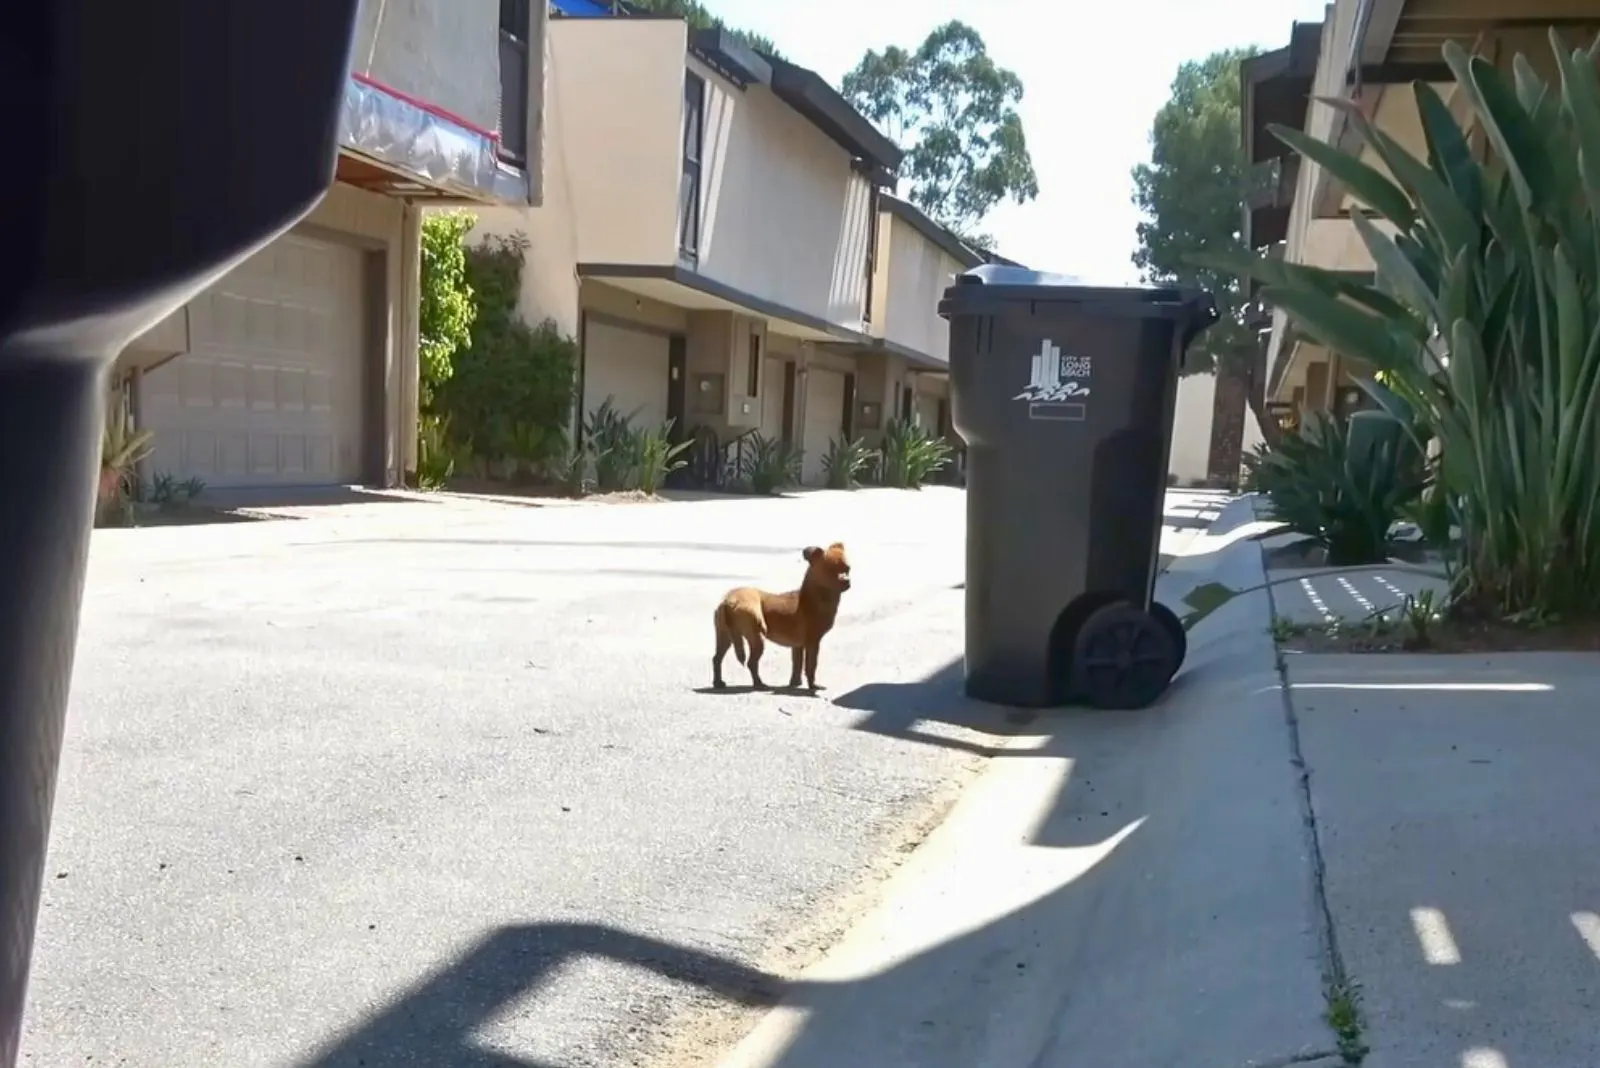 homeless dog in the street